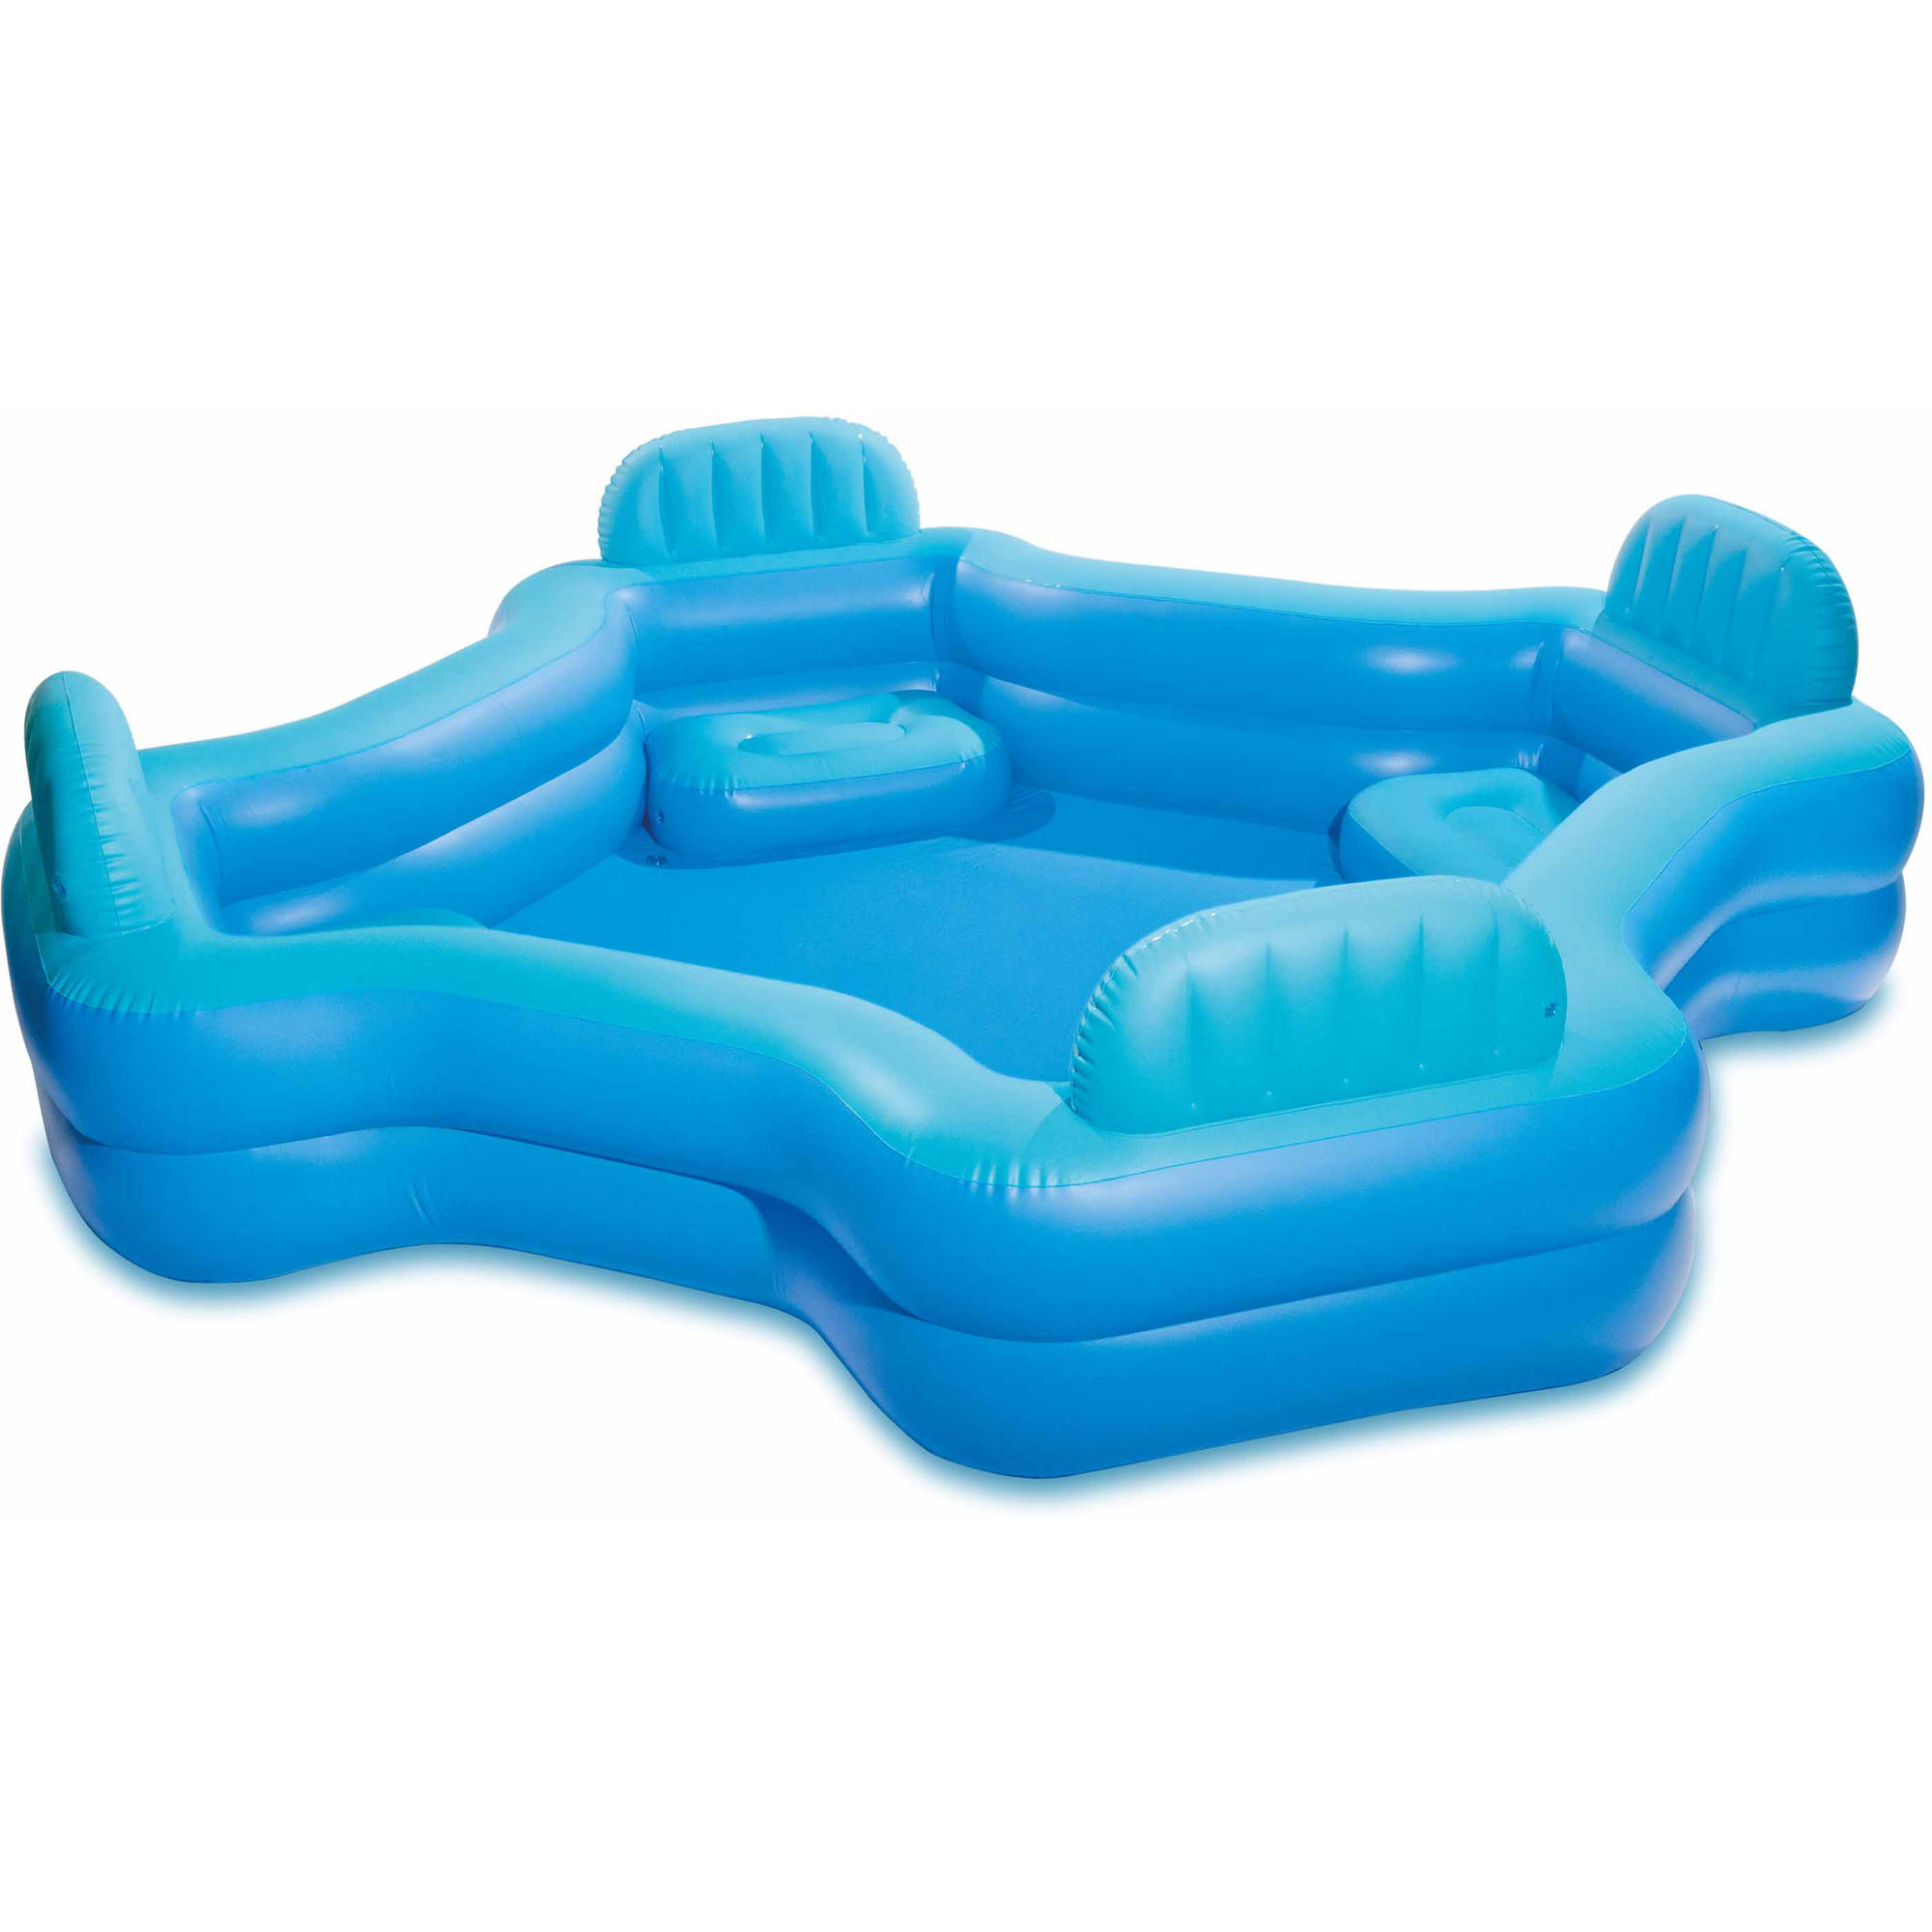 Intex Inflatable Swim Center Family Lounge Pool, 105" x 105" x 26" - image 2 of 2